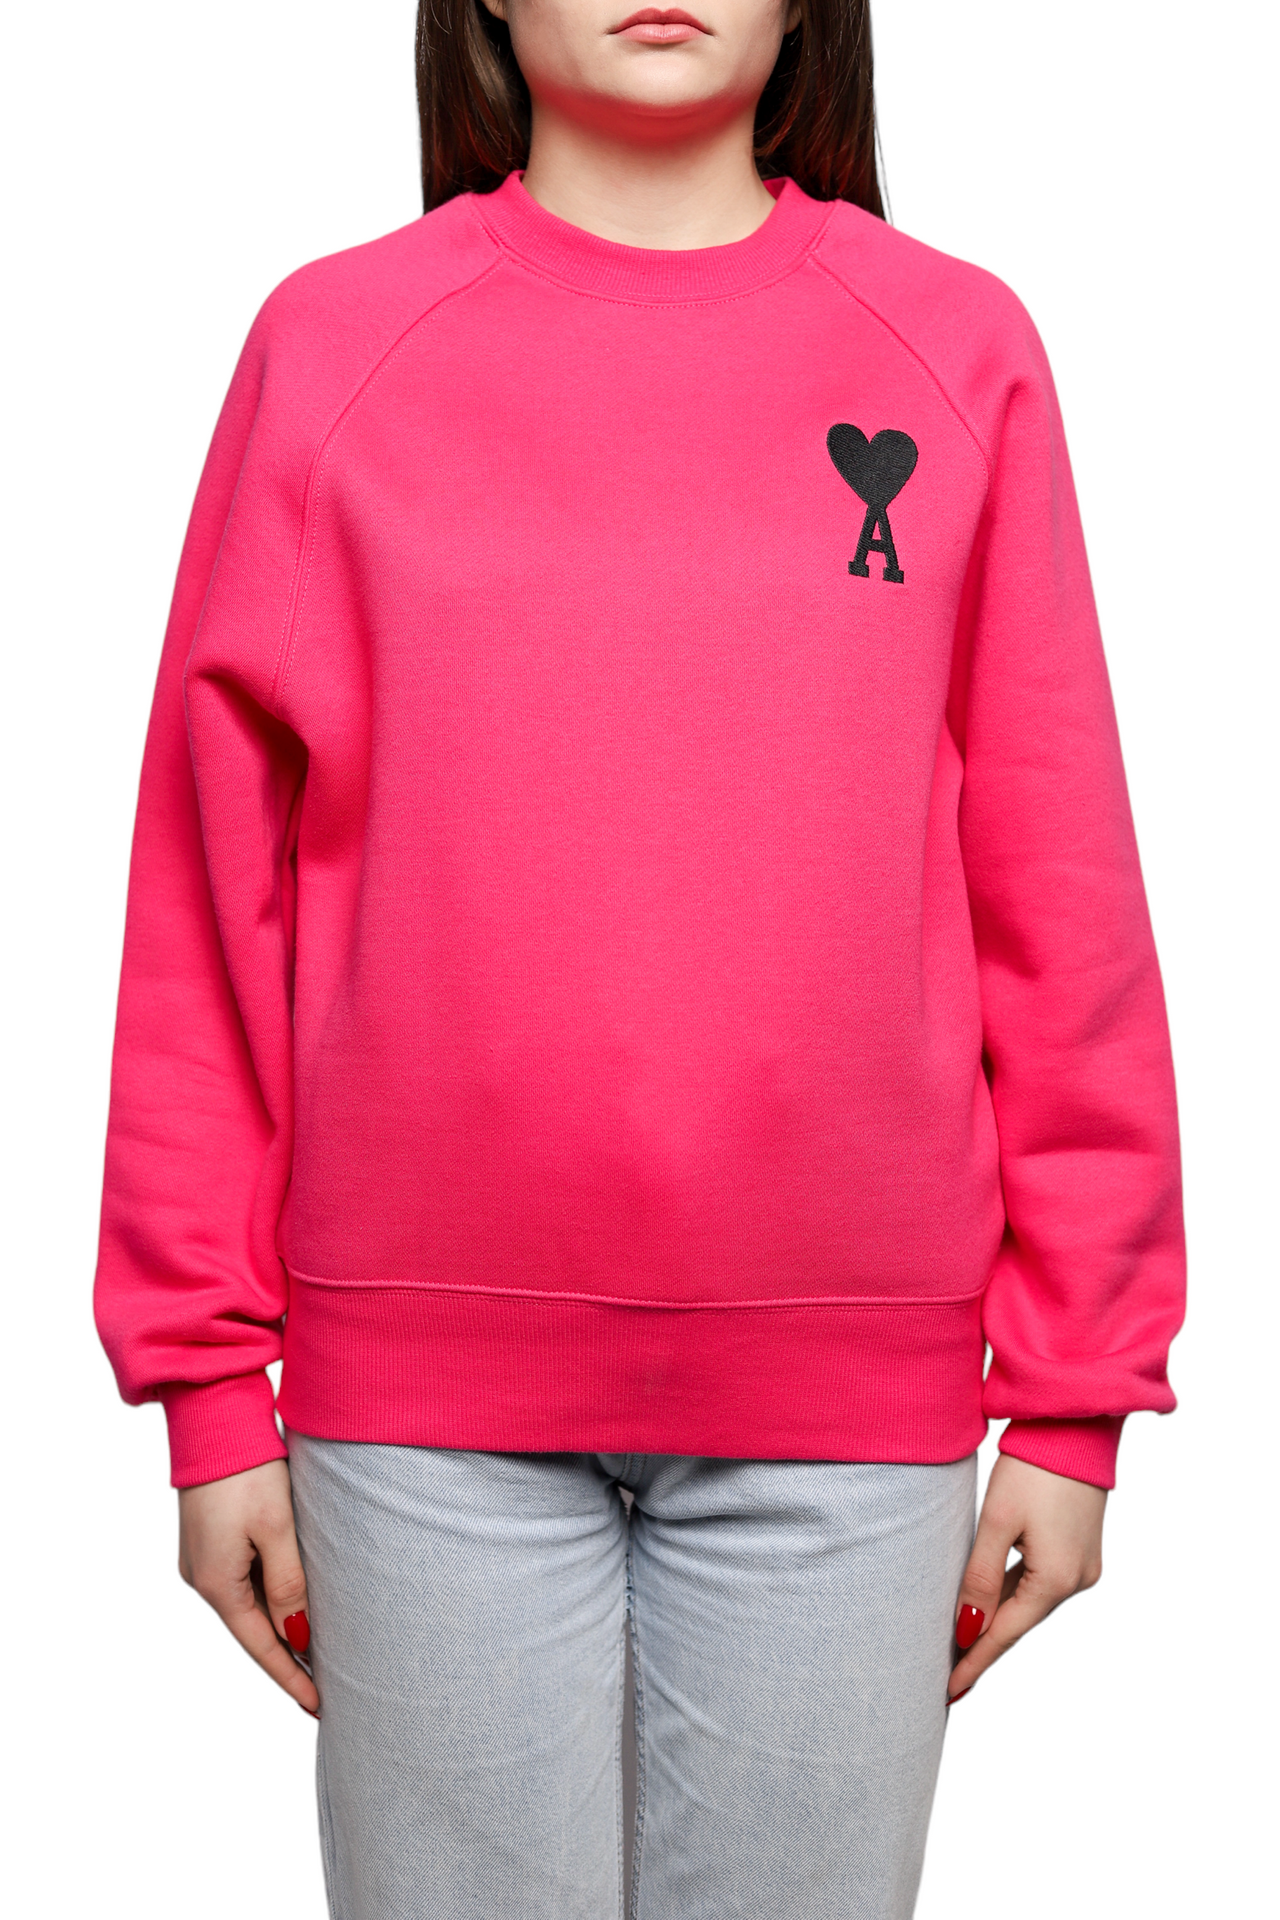 AMI Paris Embroidered Sweatshirt Pink